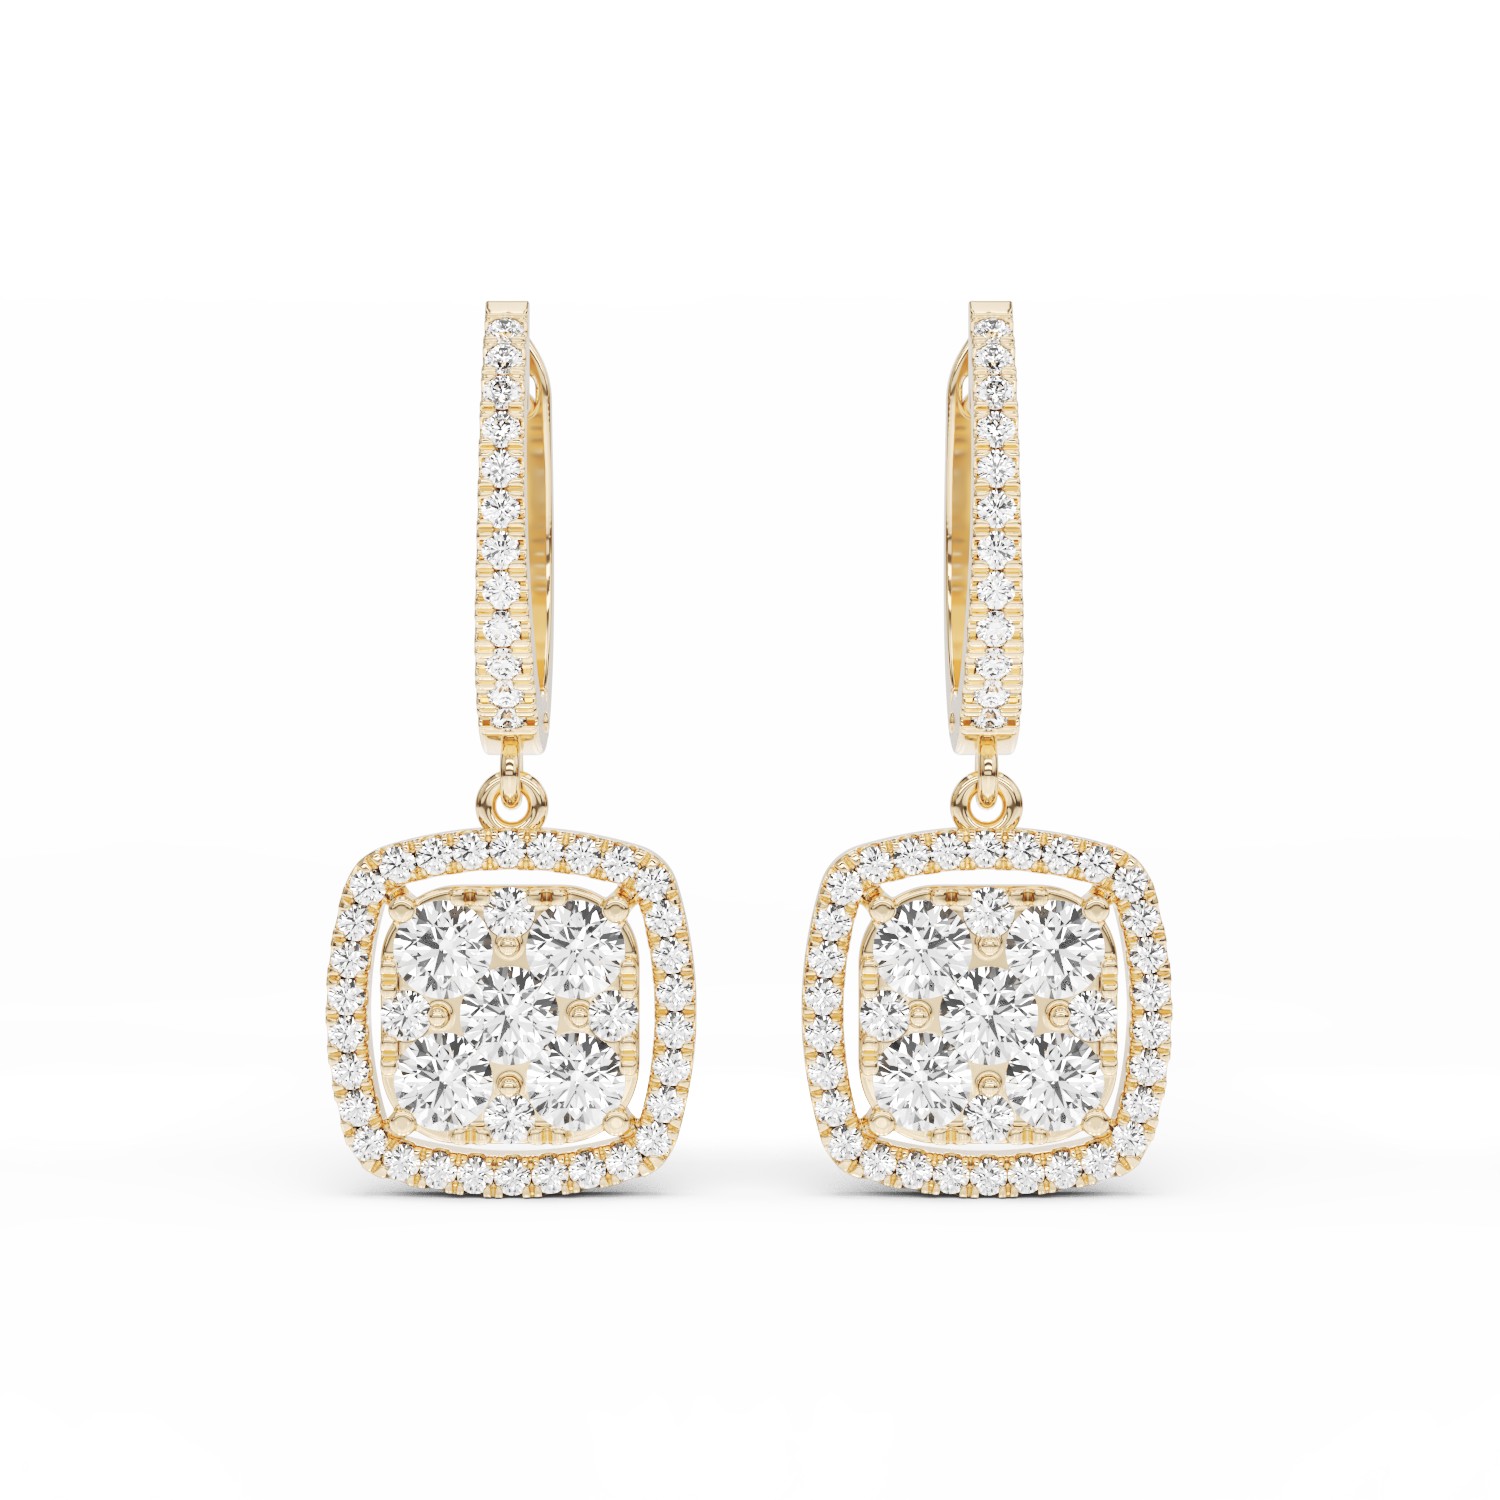 18K yellow gold earrings with 1.08ct diamonds